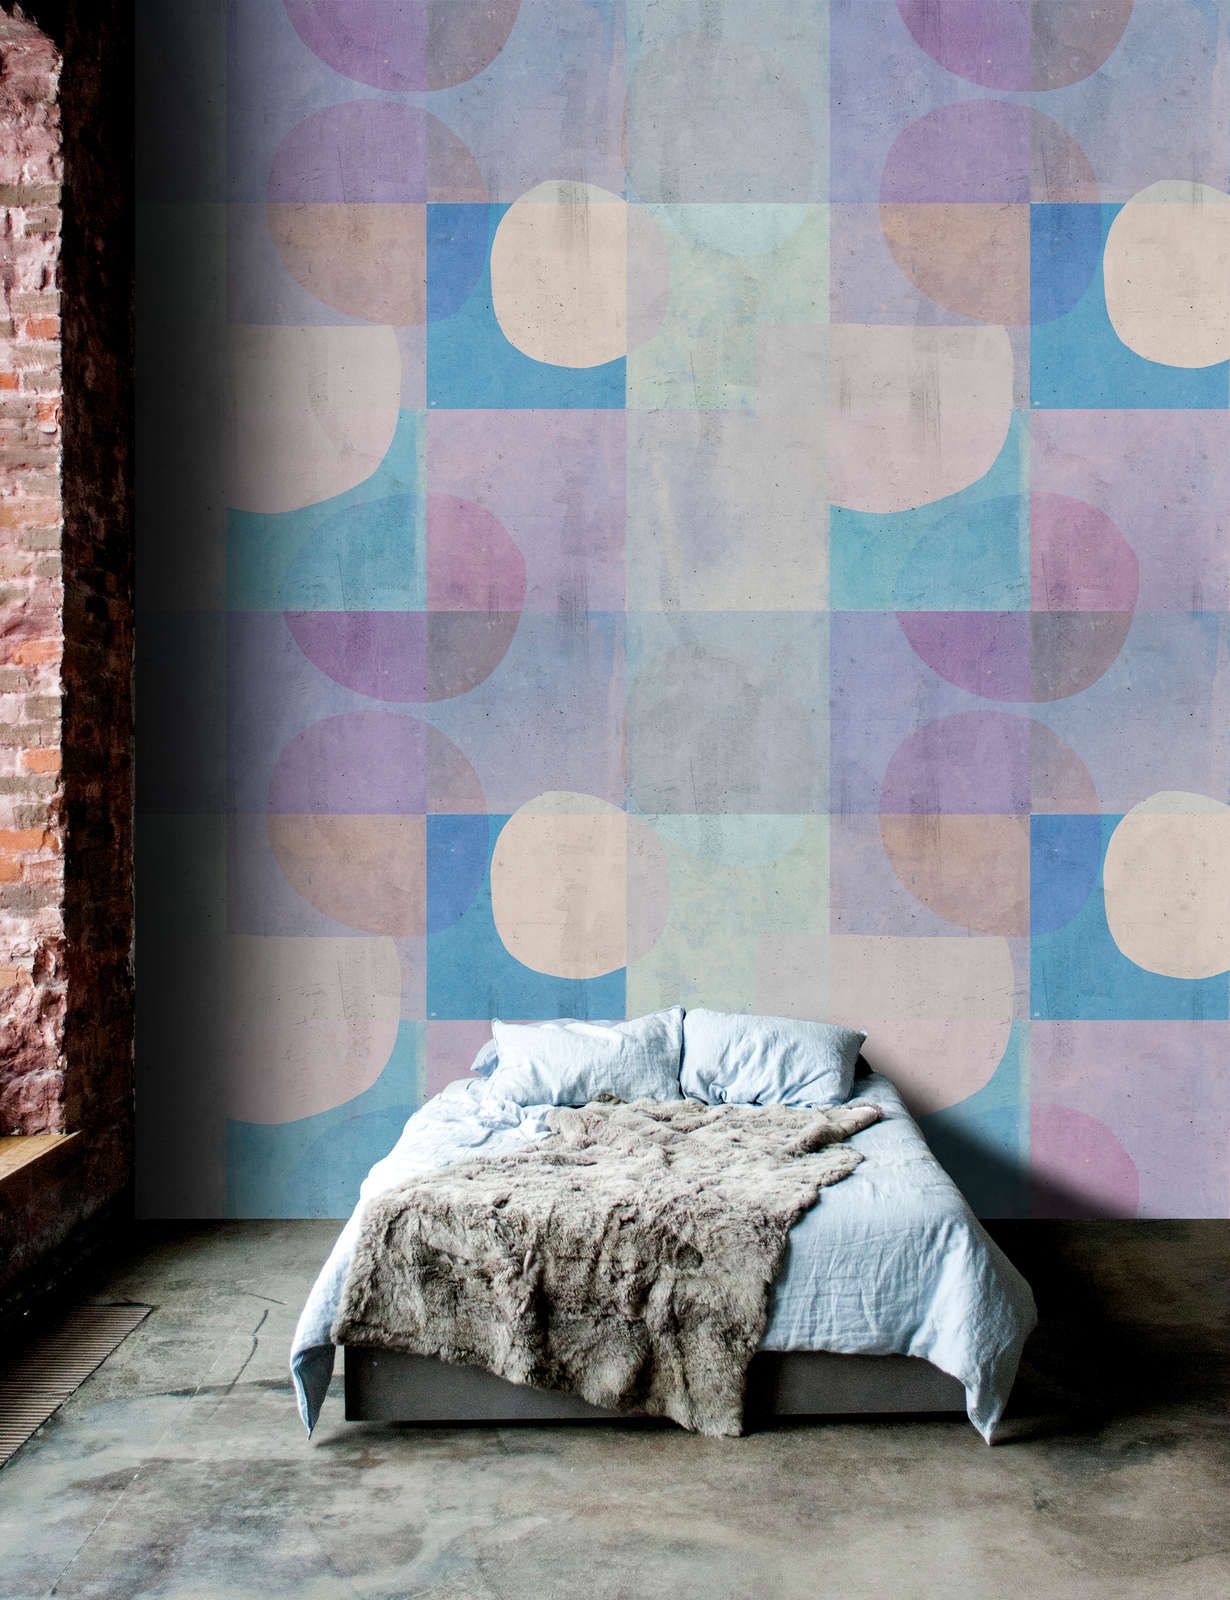             Photo wallpaper »elija 2« - retro pattern in concrete look - blue, purple | Lightly textured non-woven
        